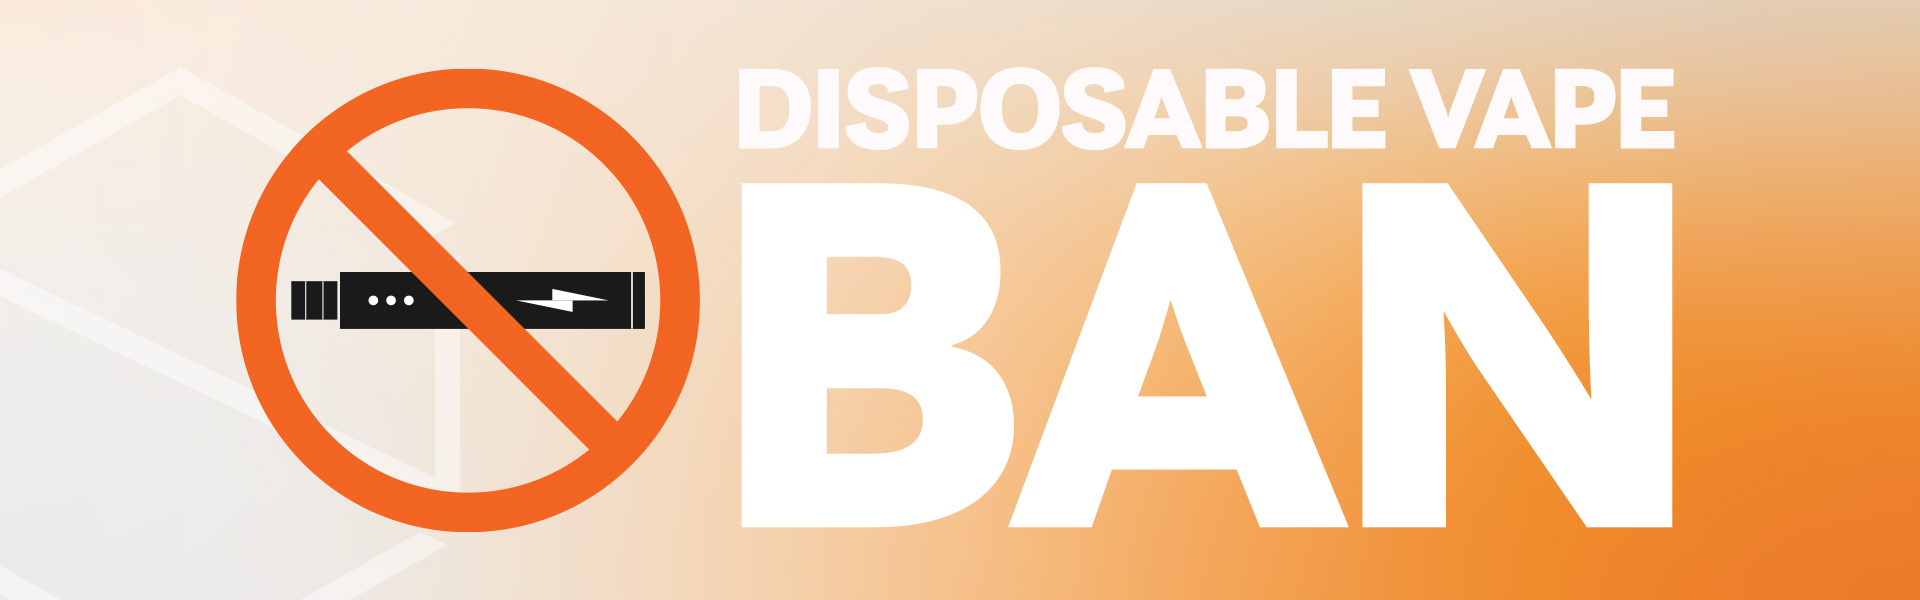 disposable vape ban globally